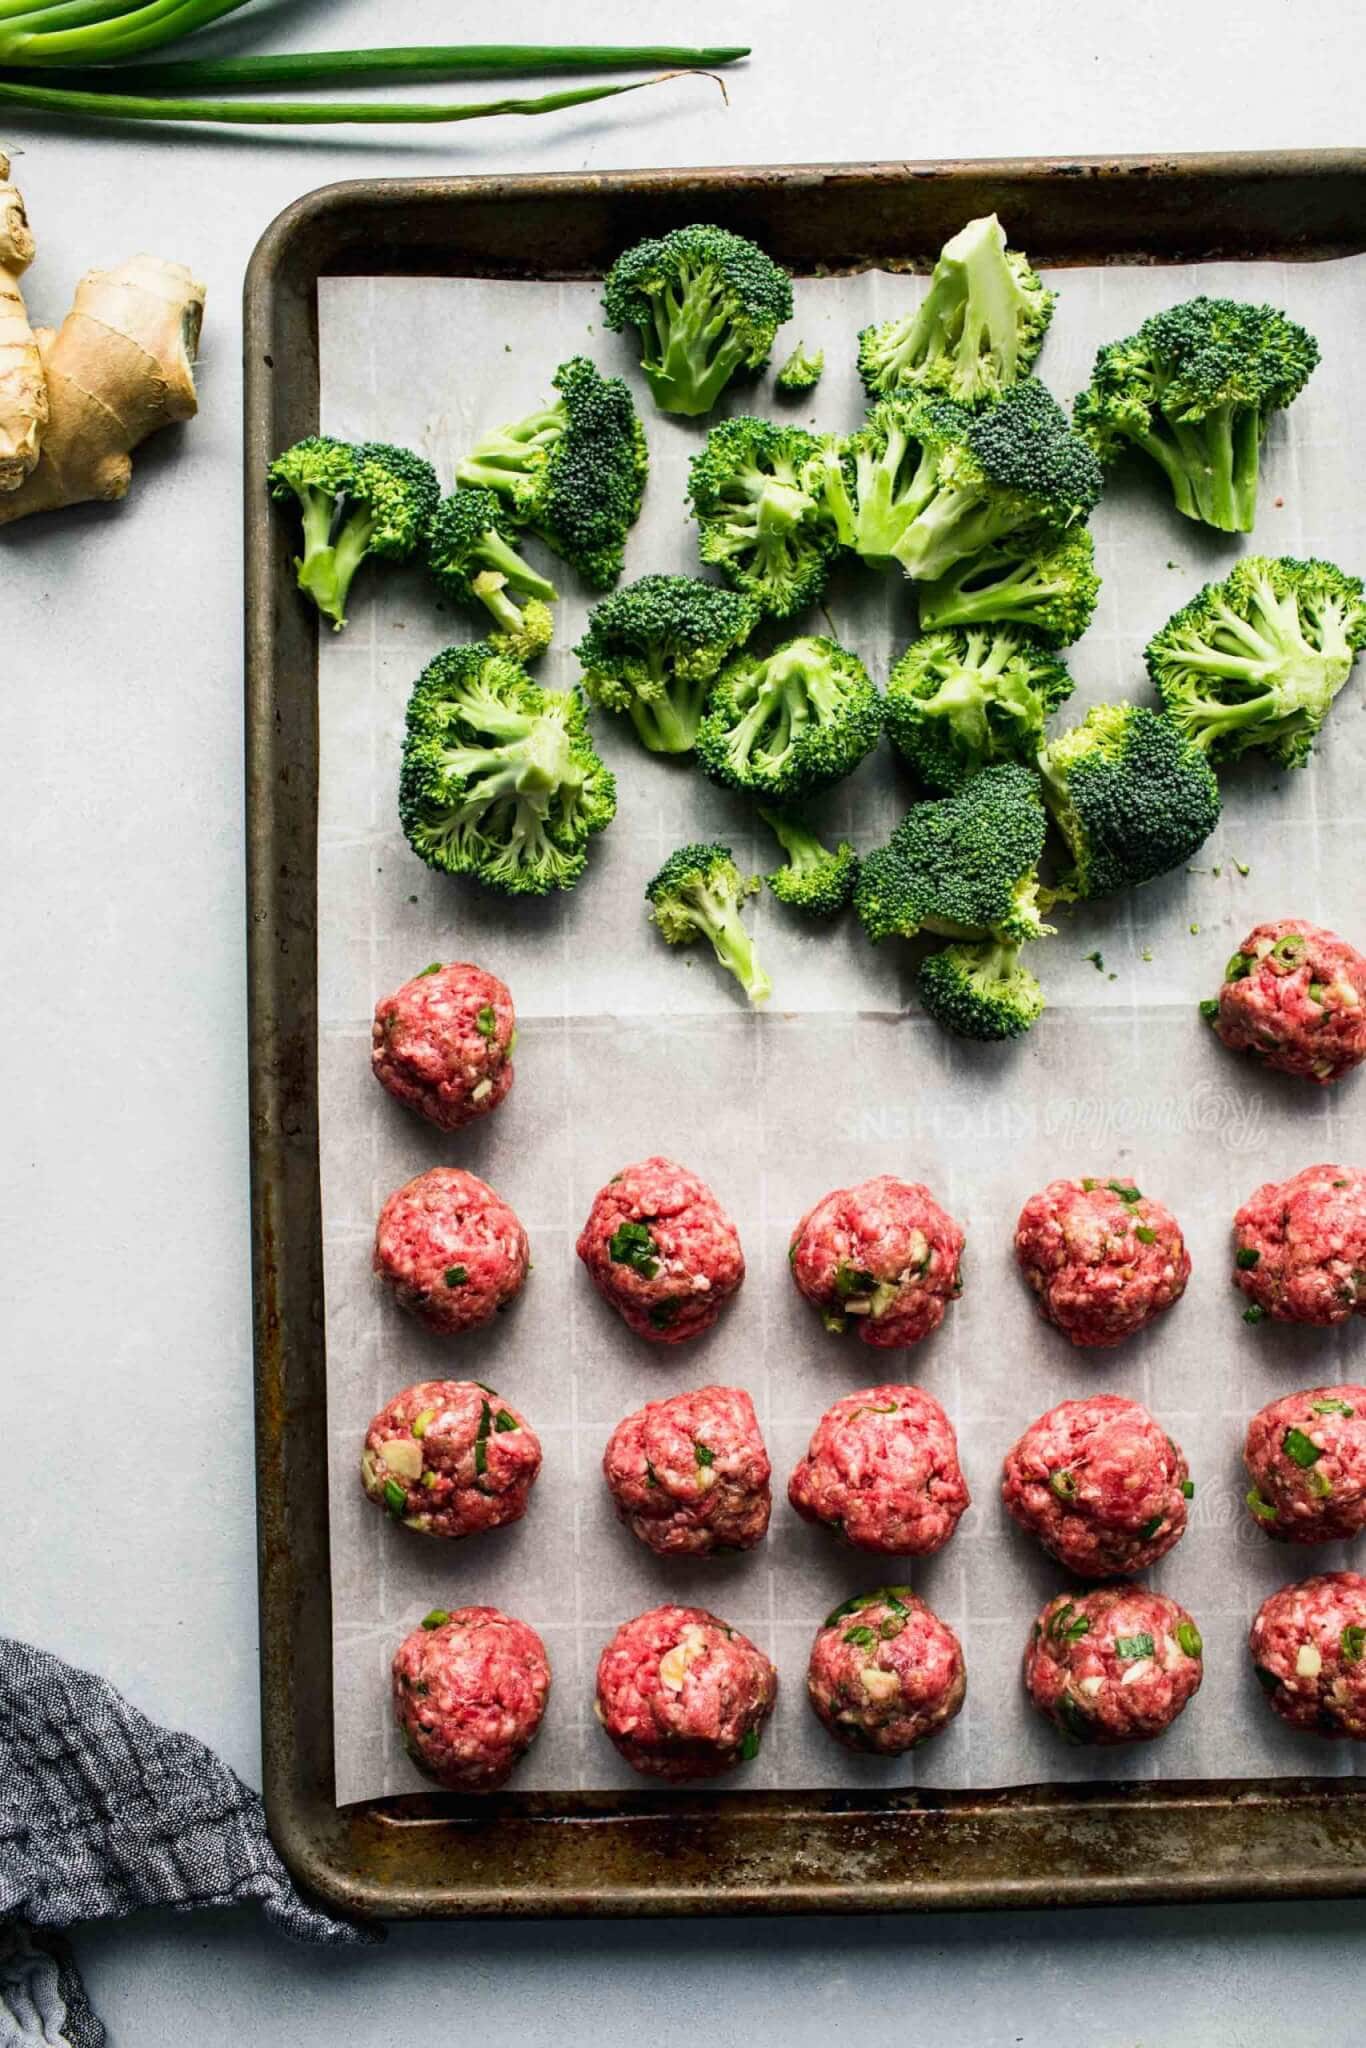 Uncooked meatballs and broccoli on baking sheet.